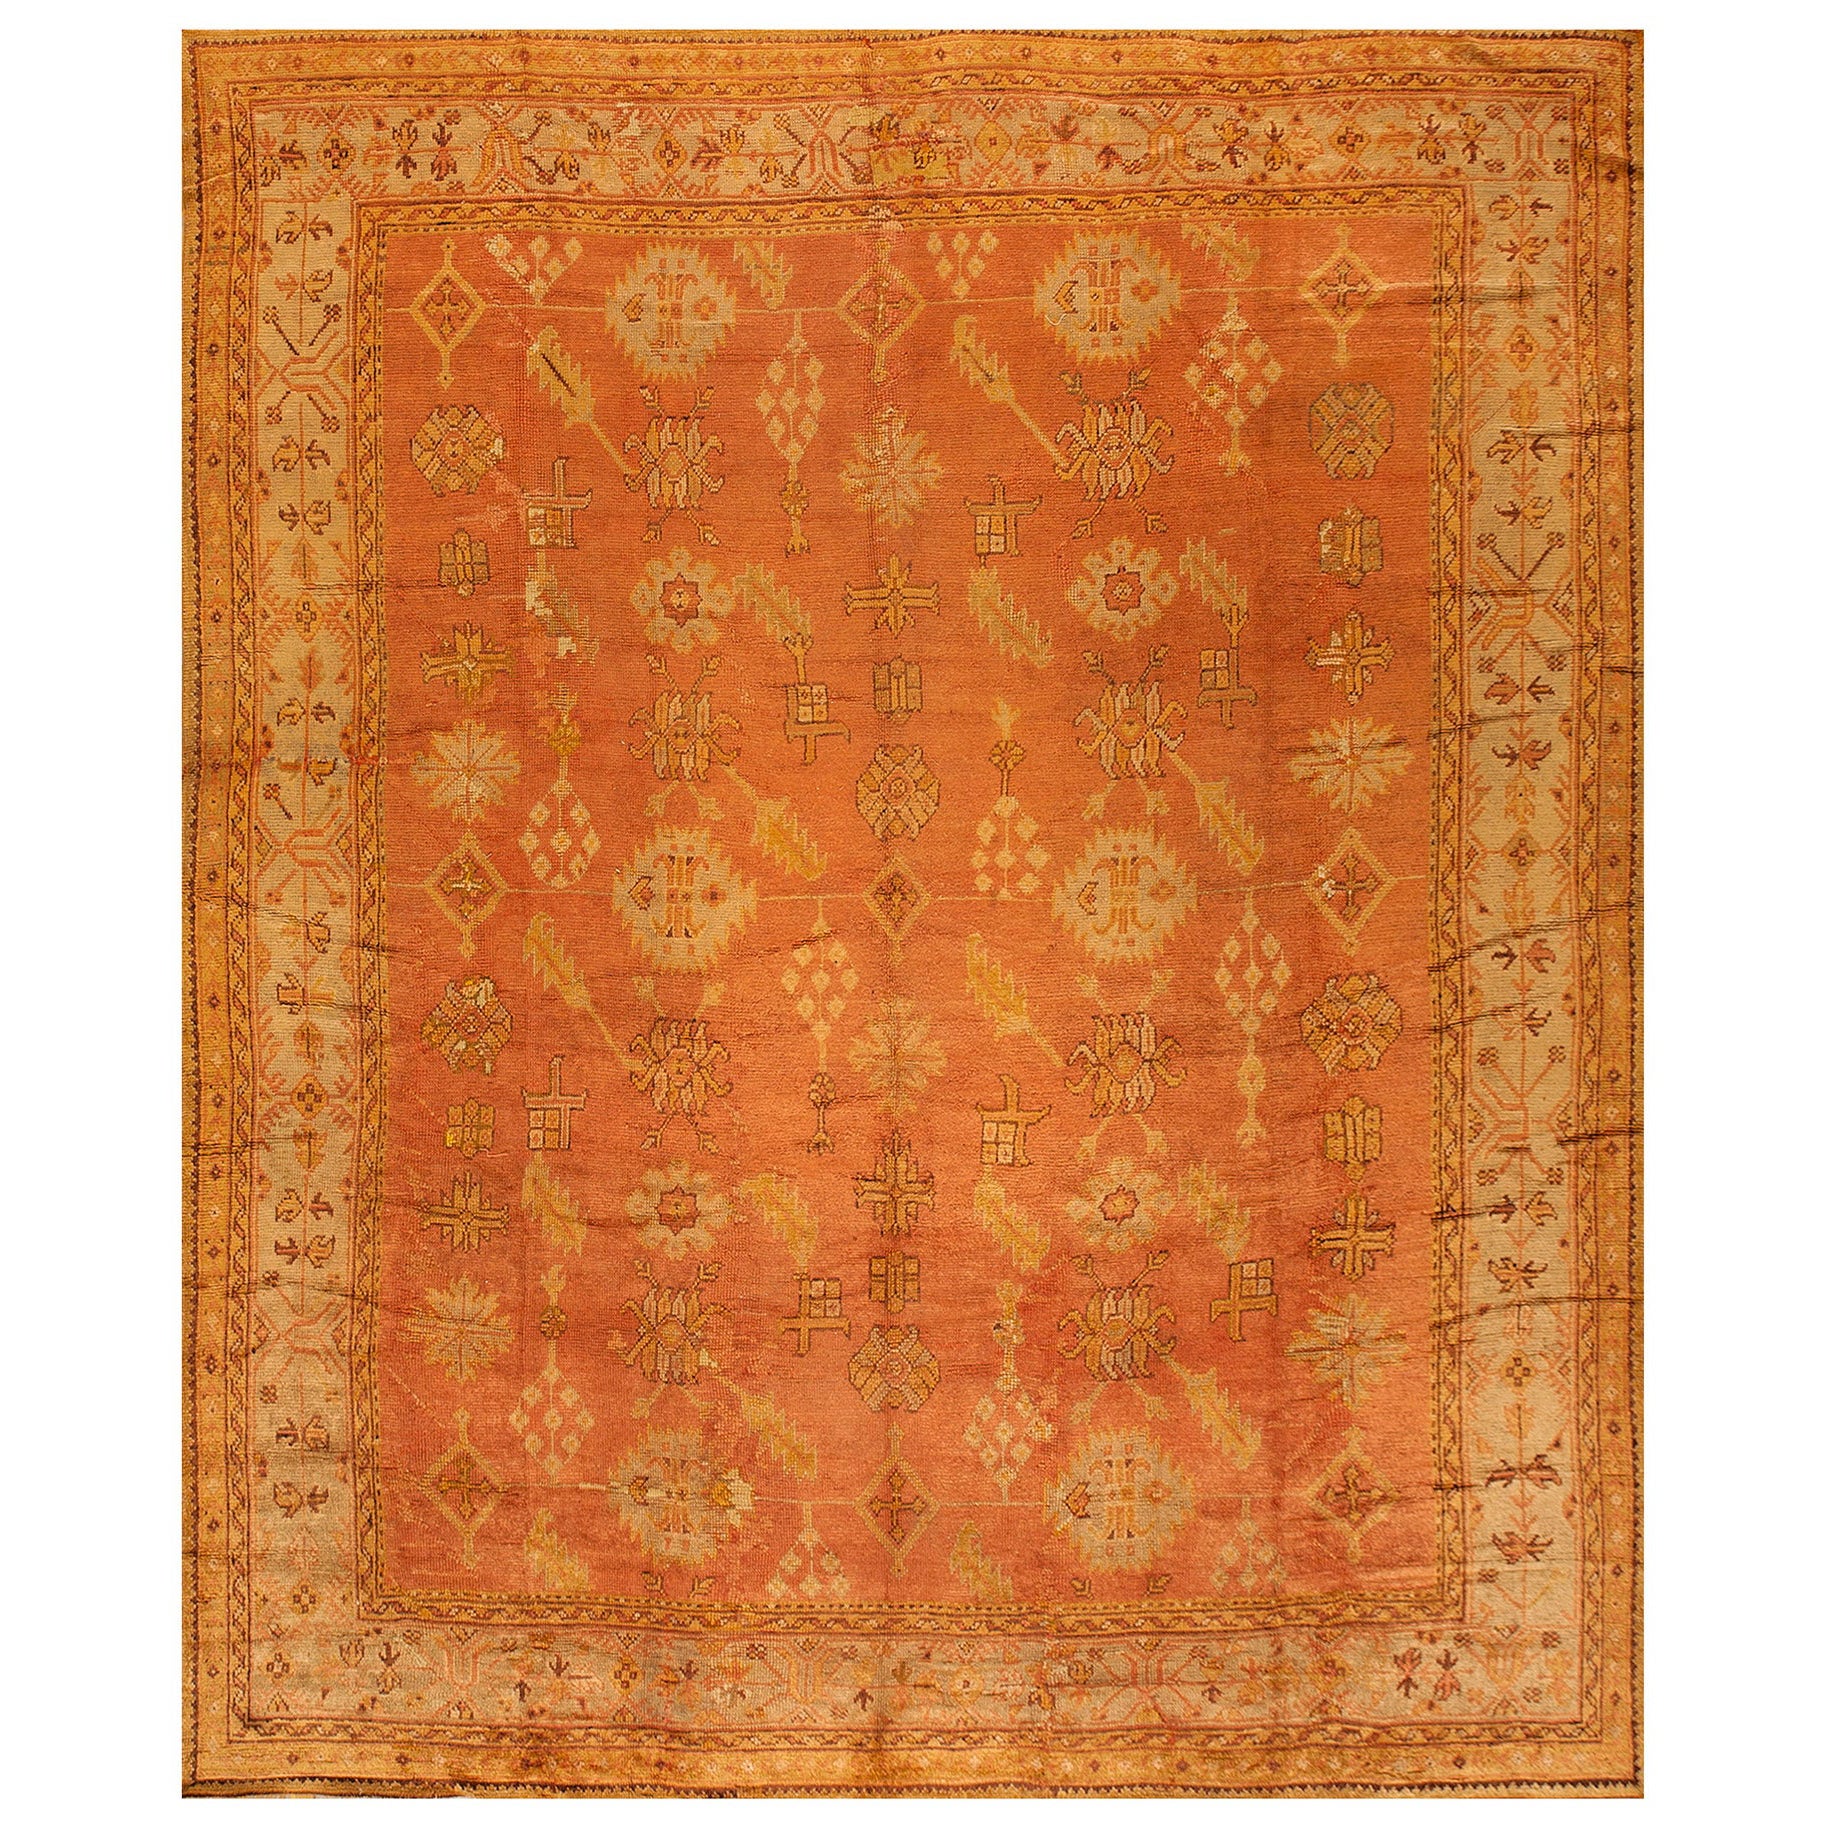 Early 20th Century Turkish Oushak Carpet ( 10'5'' x 12'6'' - 318 x 382 )